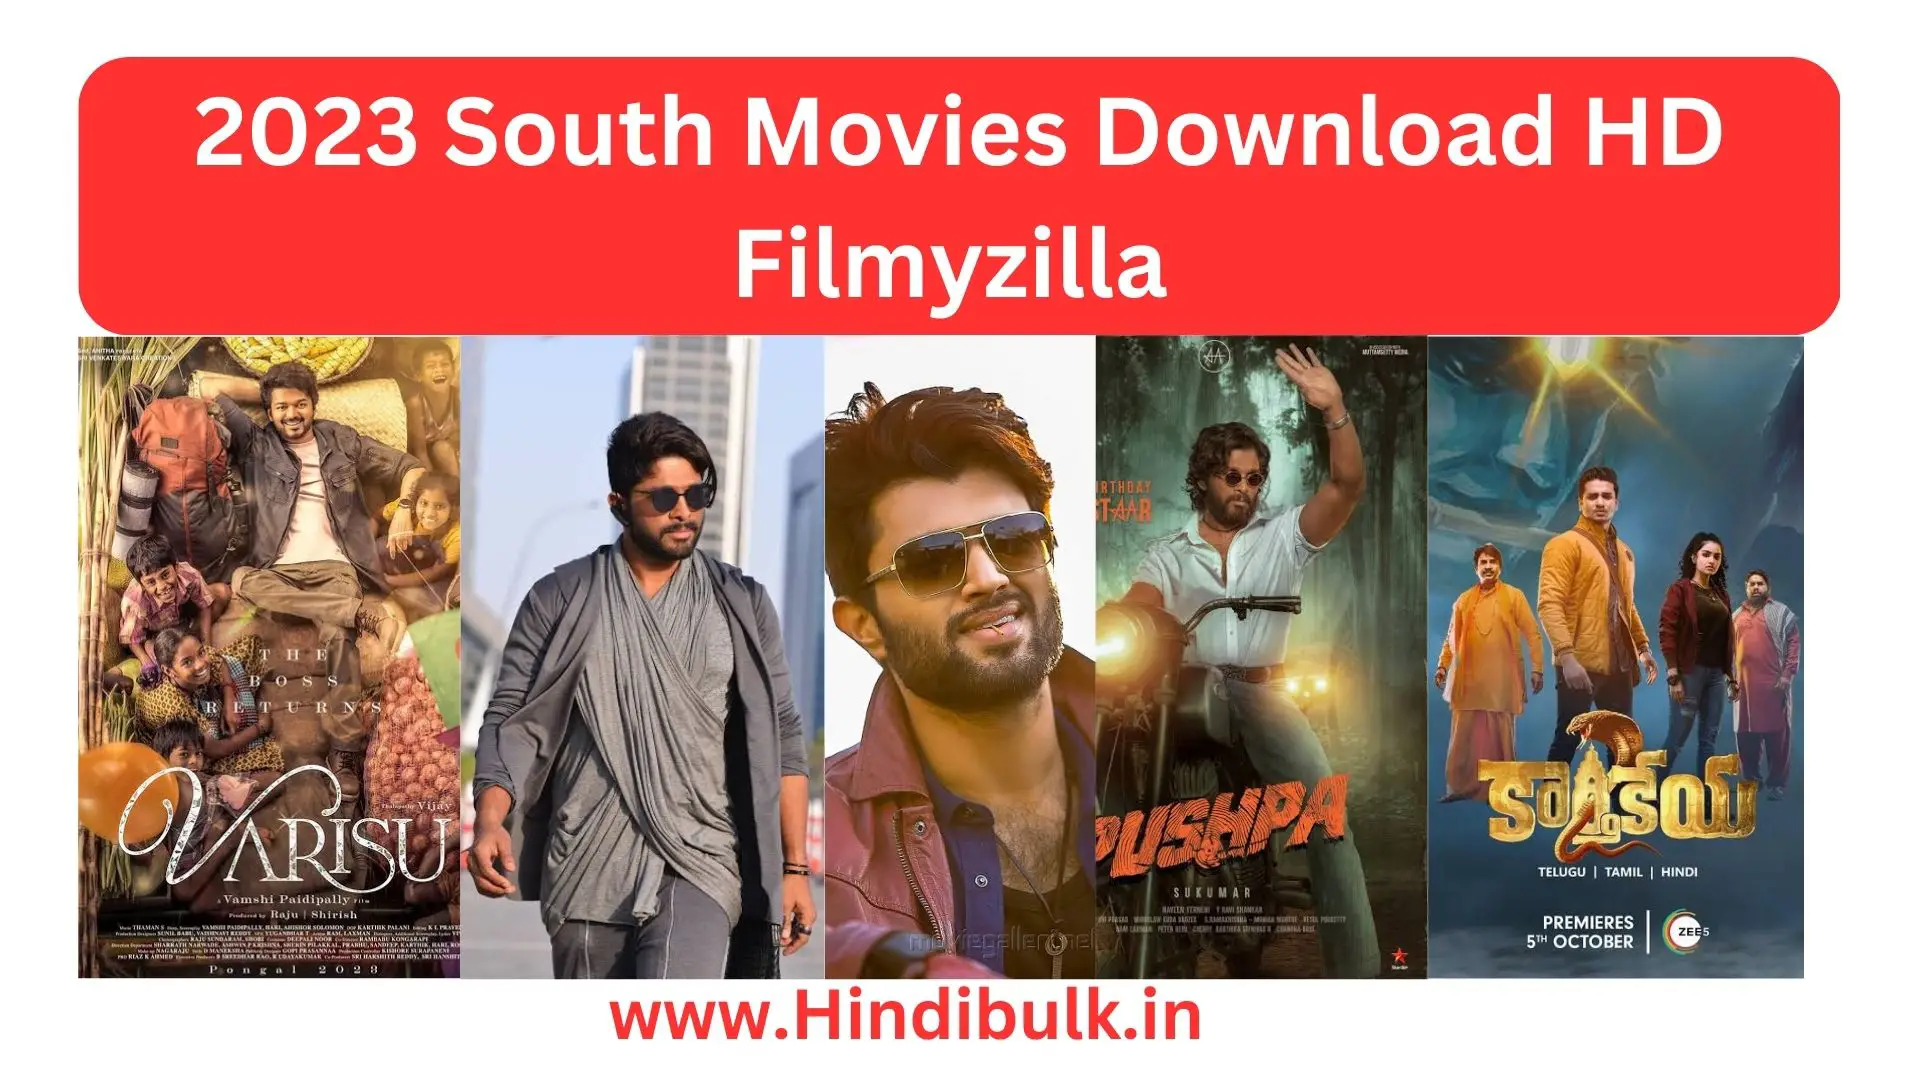 South Movies Download Filmyzilla in Hindi HD